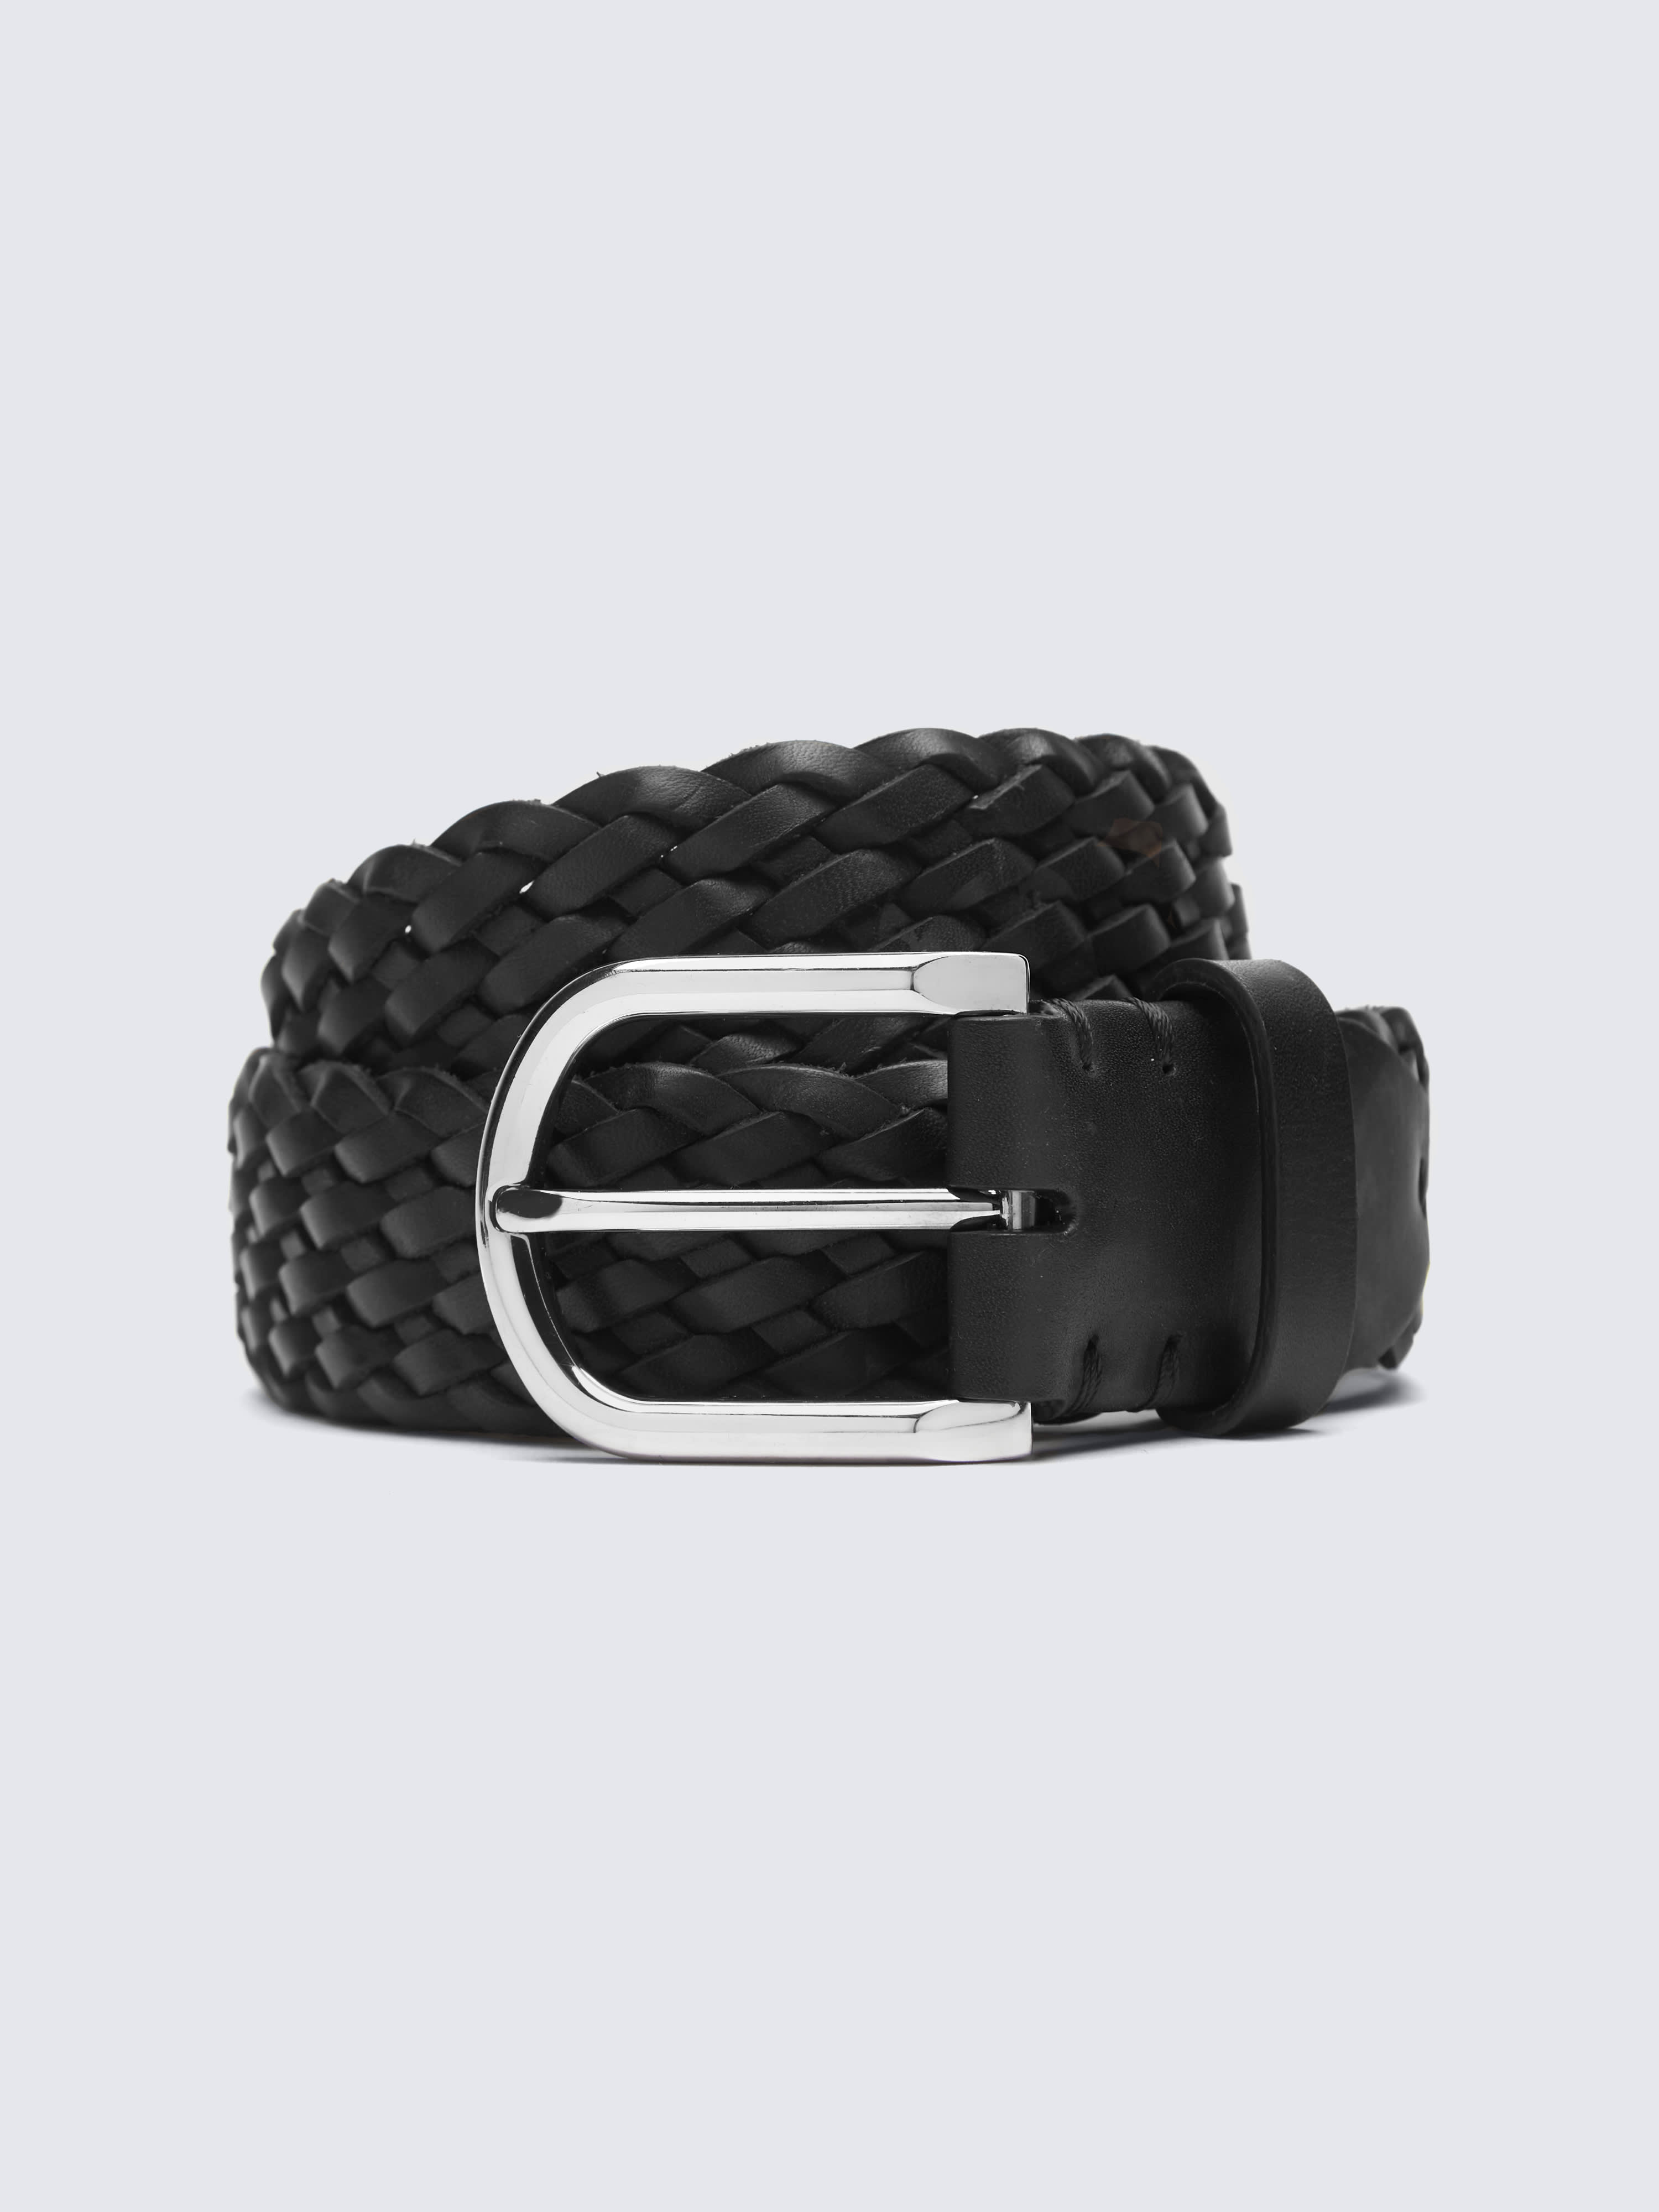 Black calf leather braided belt